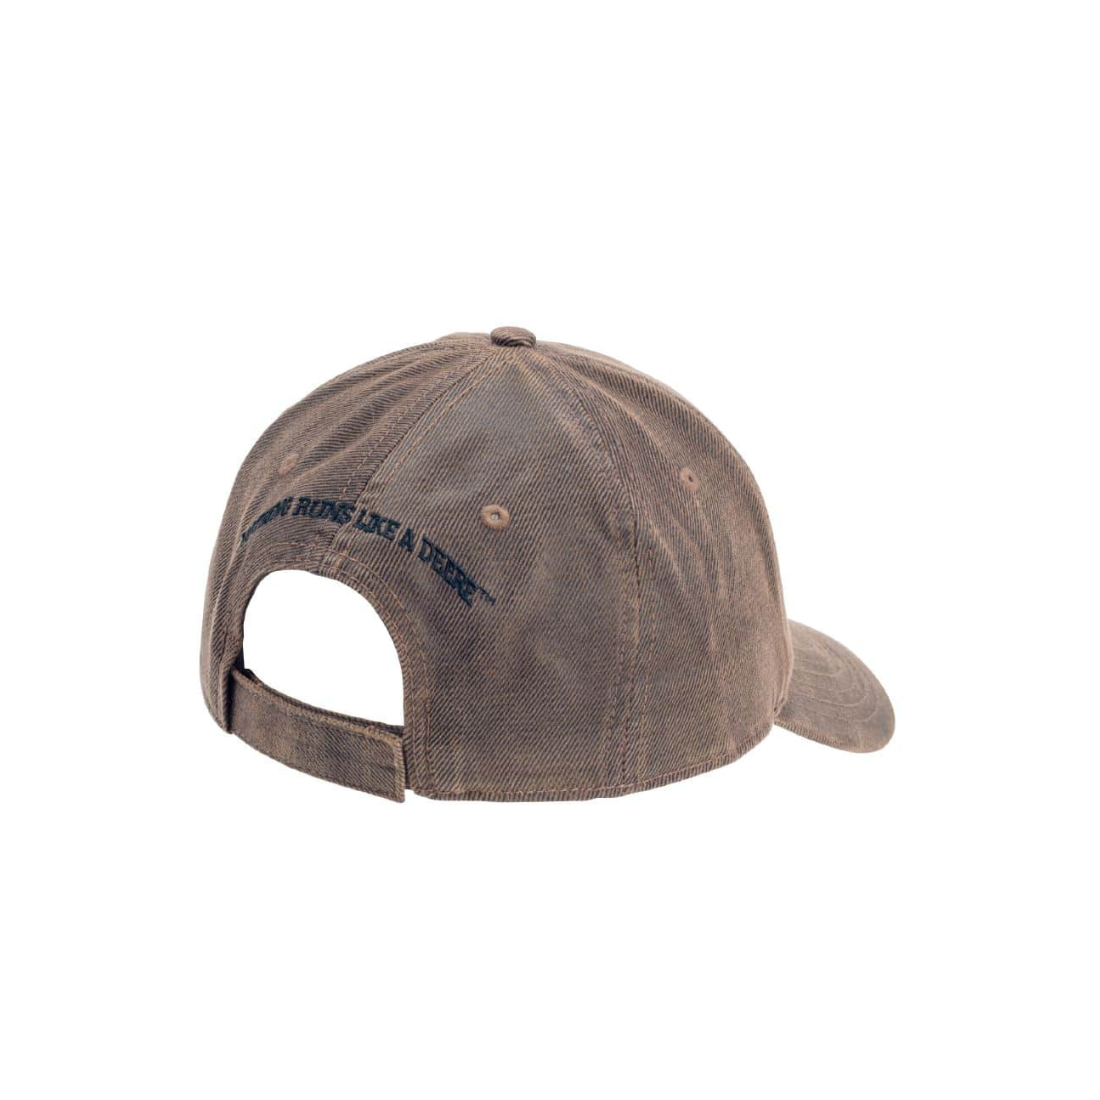 Oilskin Cap OS Brown Mens Hats by John Deere | The Bloke Shop